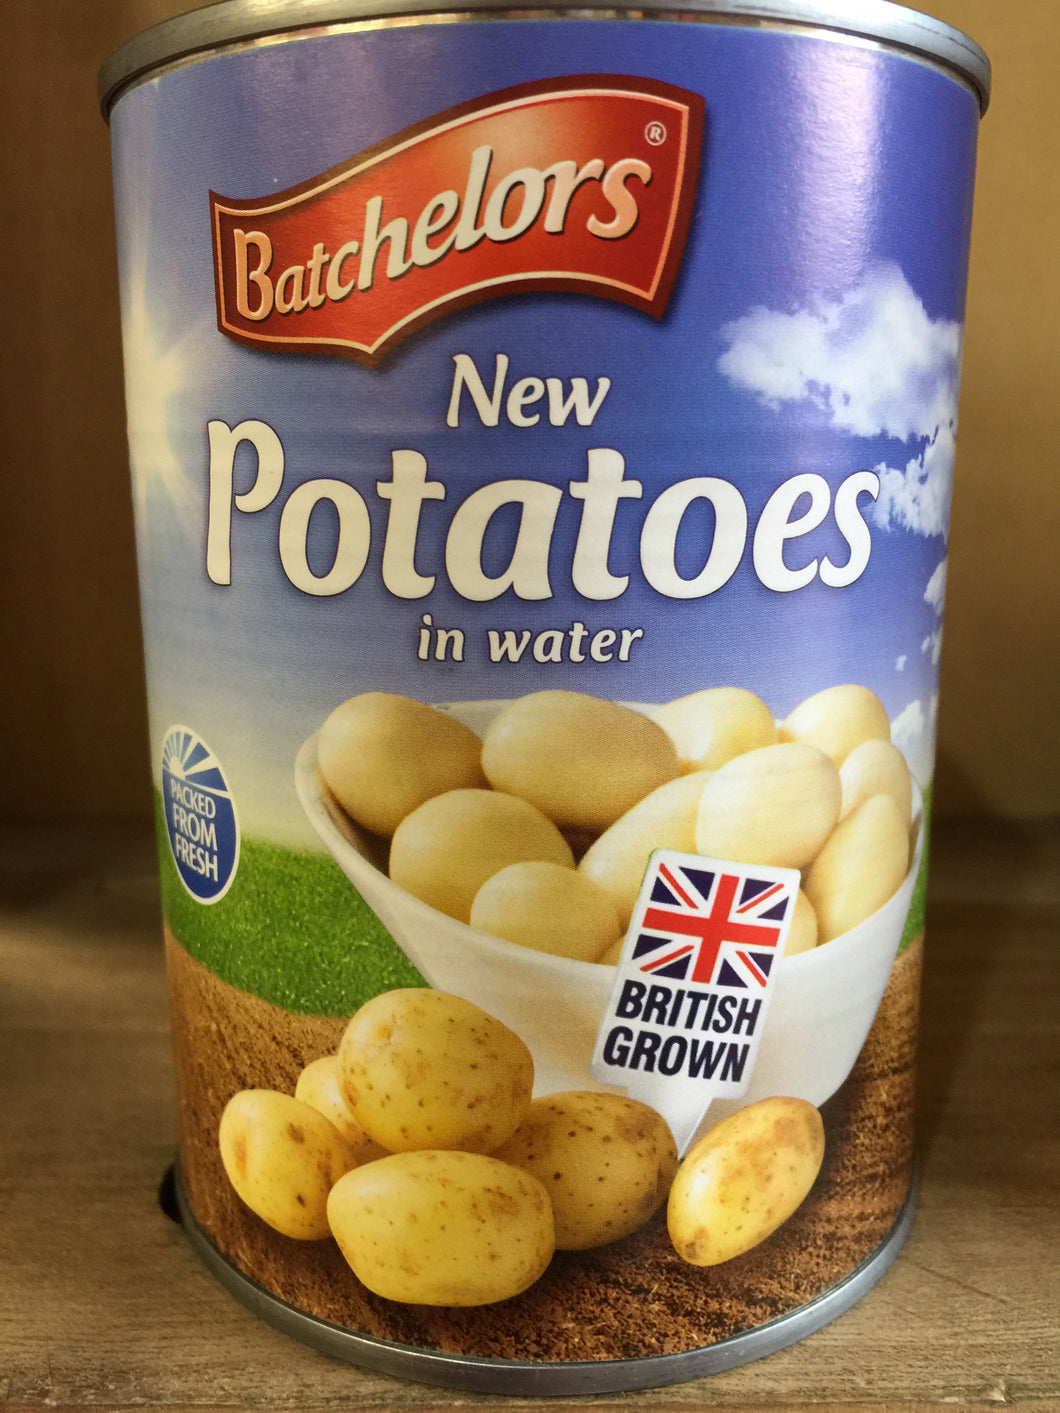 Batchelors New Potatoes in water 540g